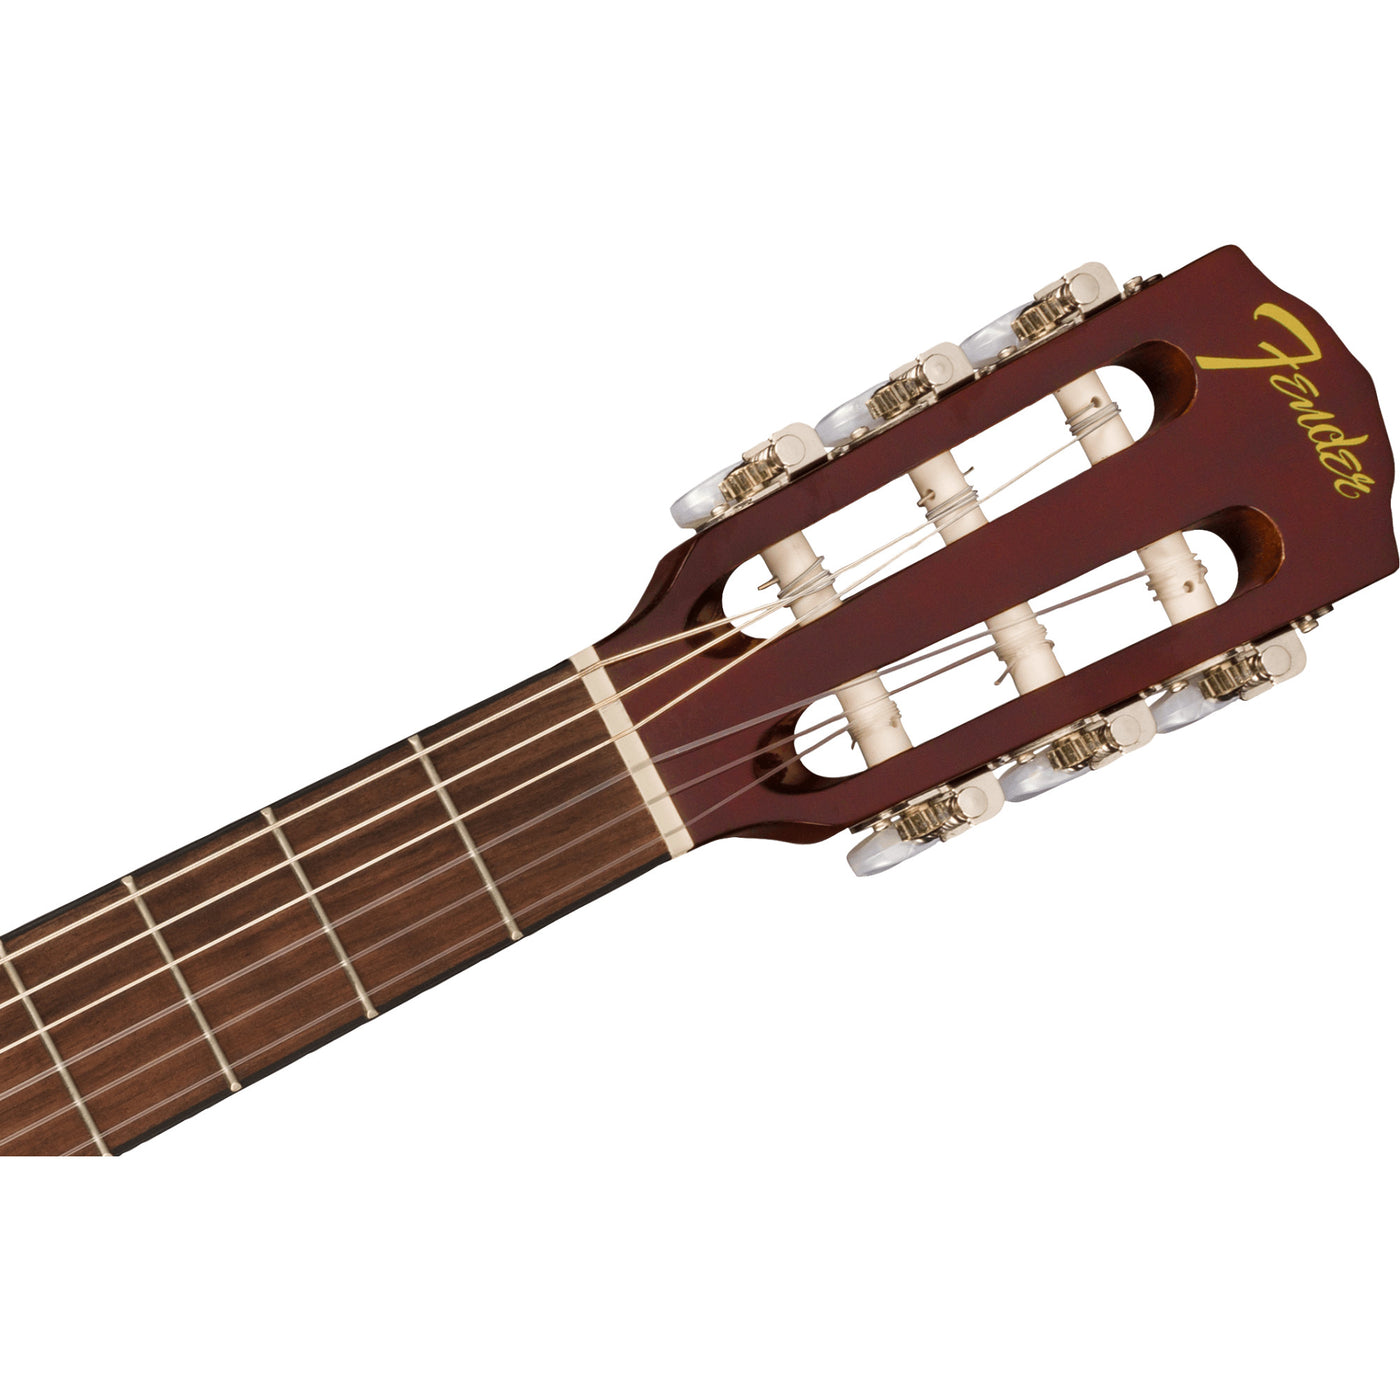 Fender FA-15N 3/4 Nylon Acoustic Guitar with Gig Bag (0971160121)